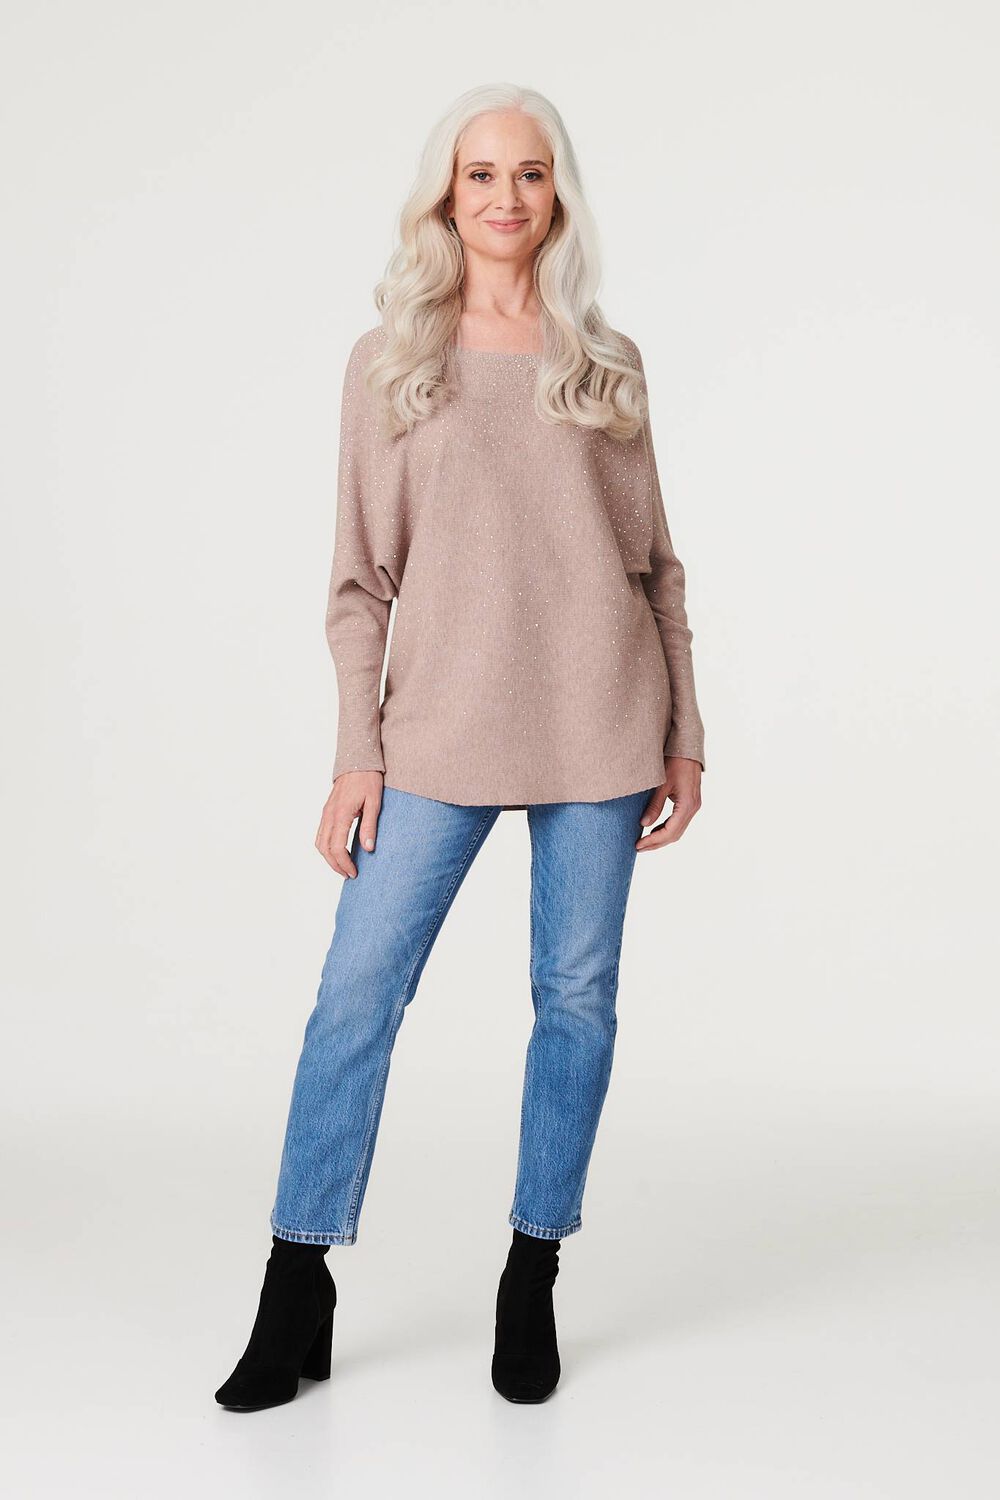 Izabel London Women’s Beige Viscose Embellished Long Sleeve Knit Top, Size: S